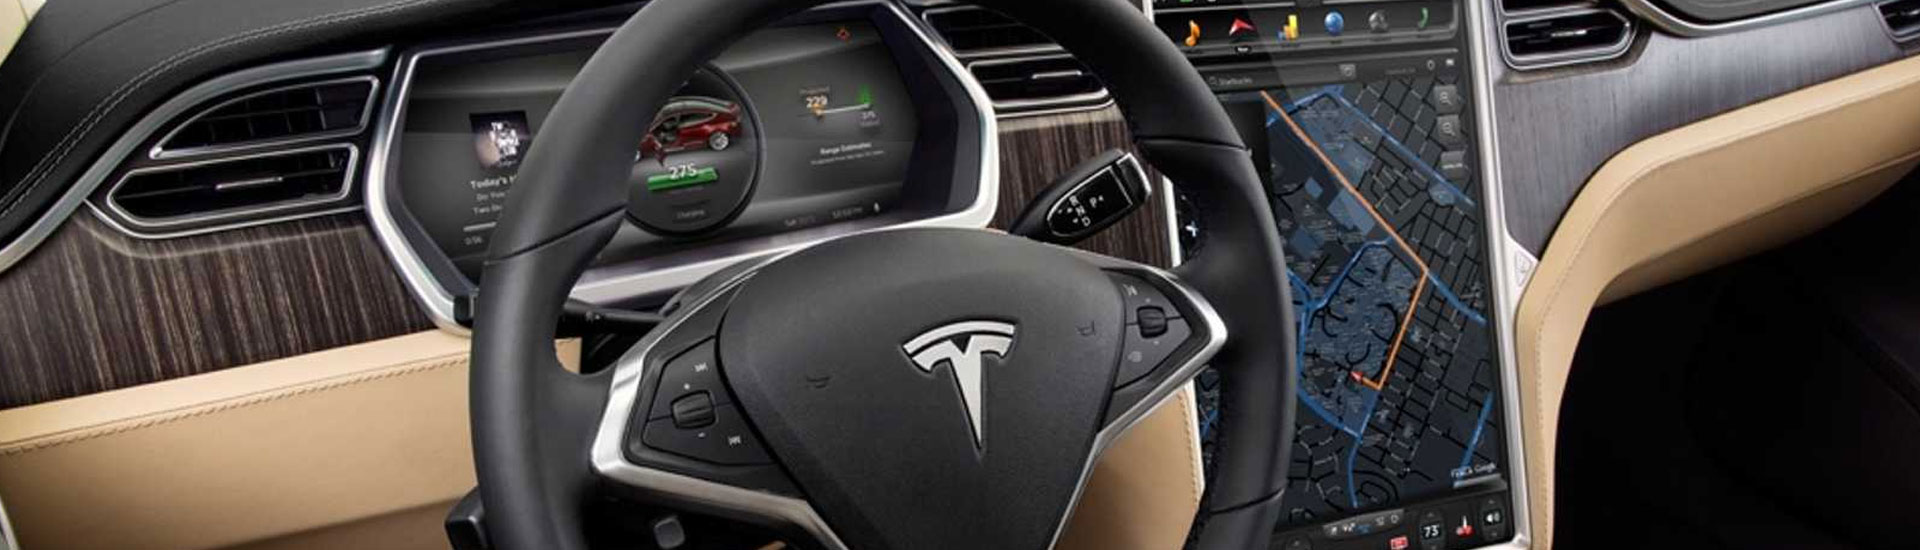 Tesla Custom Dash Kits